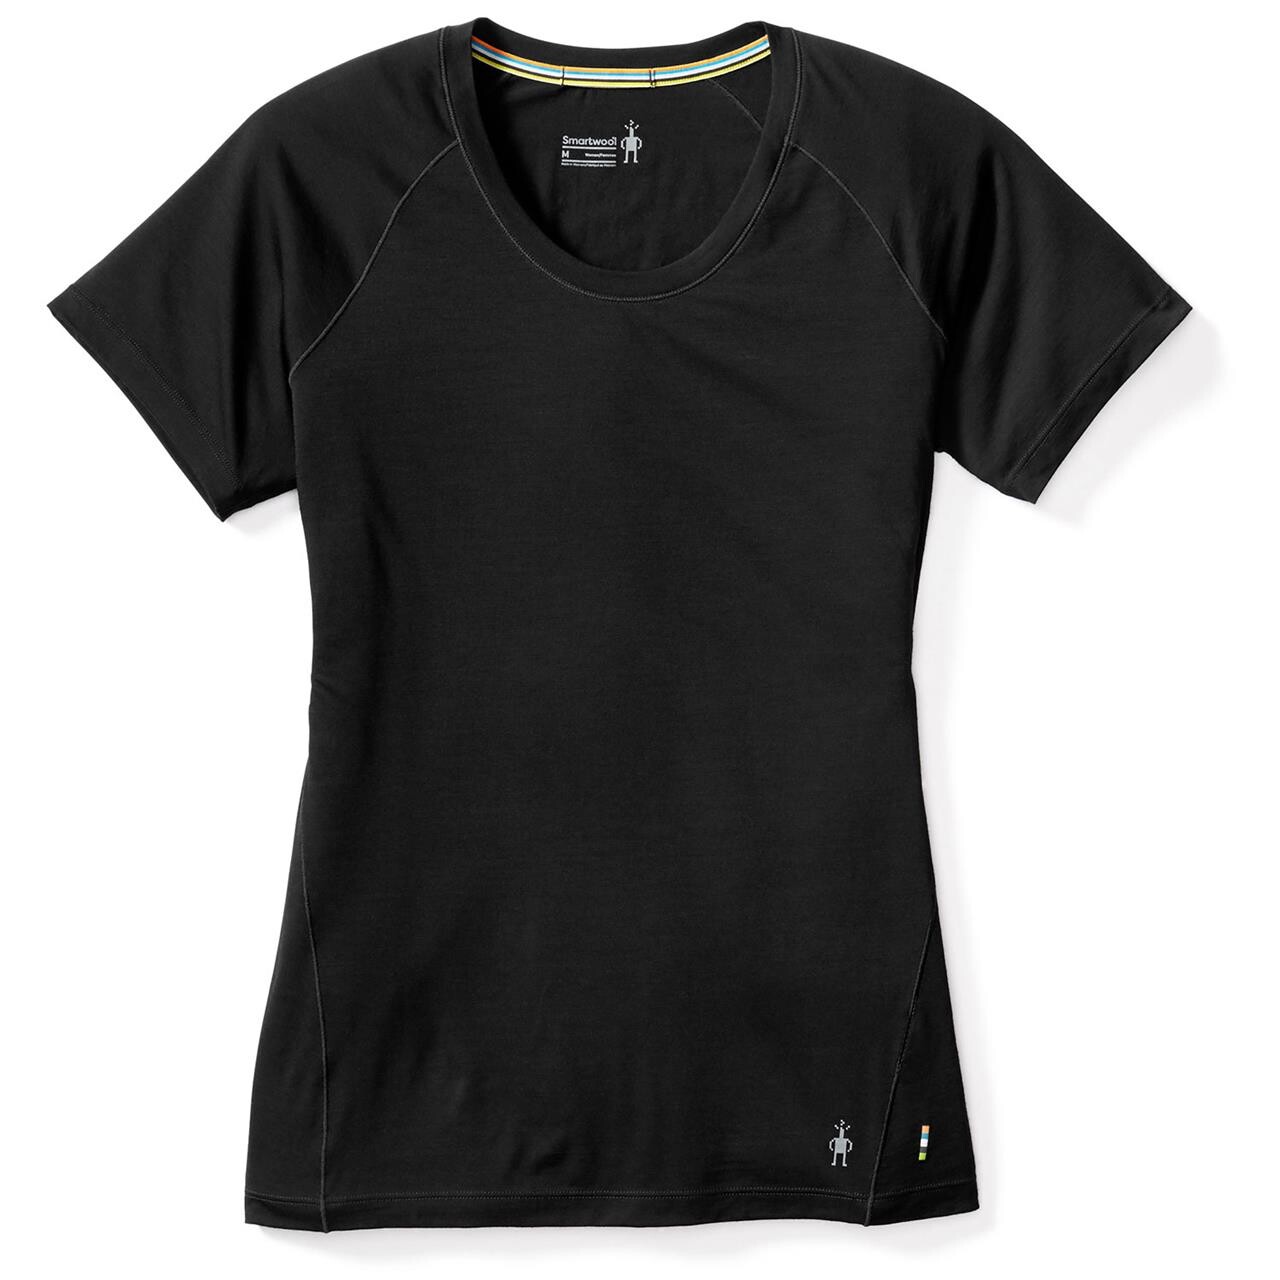 Smartwool Womens Merino Short Sleeve Tee 2022 model (Sort (BLACK) X-large)